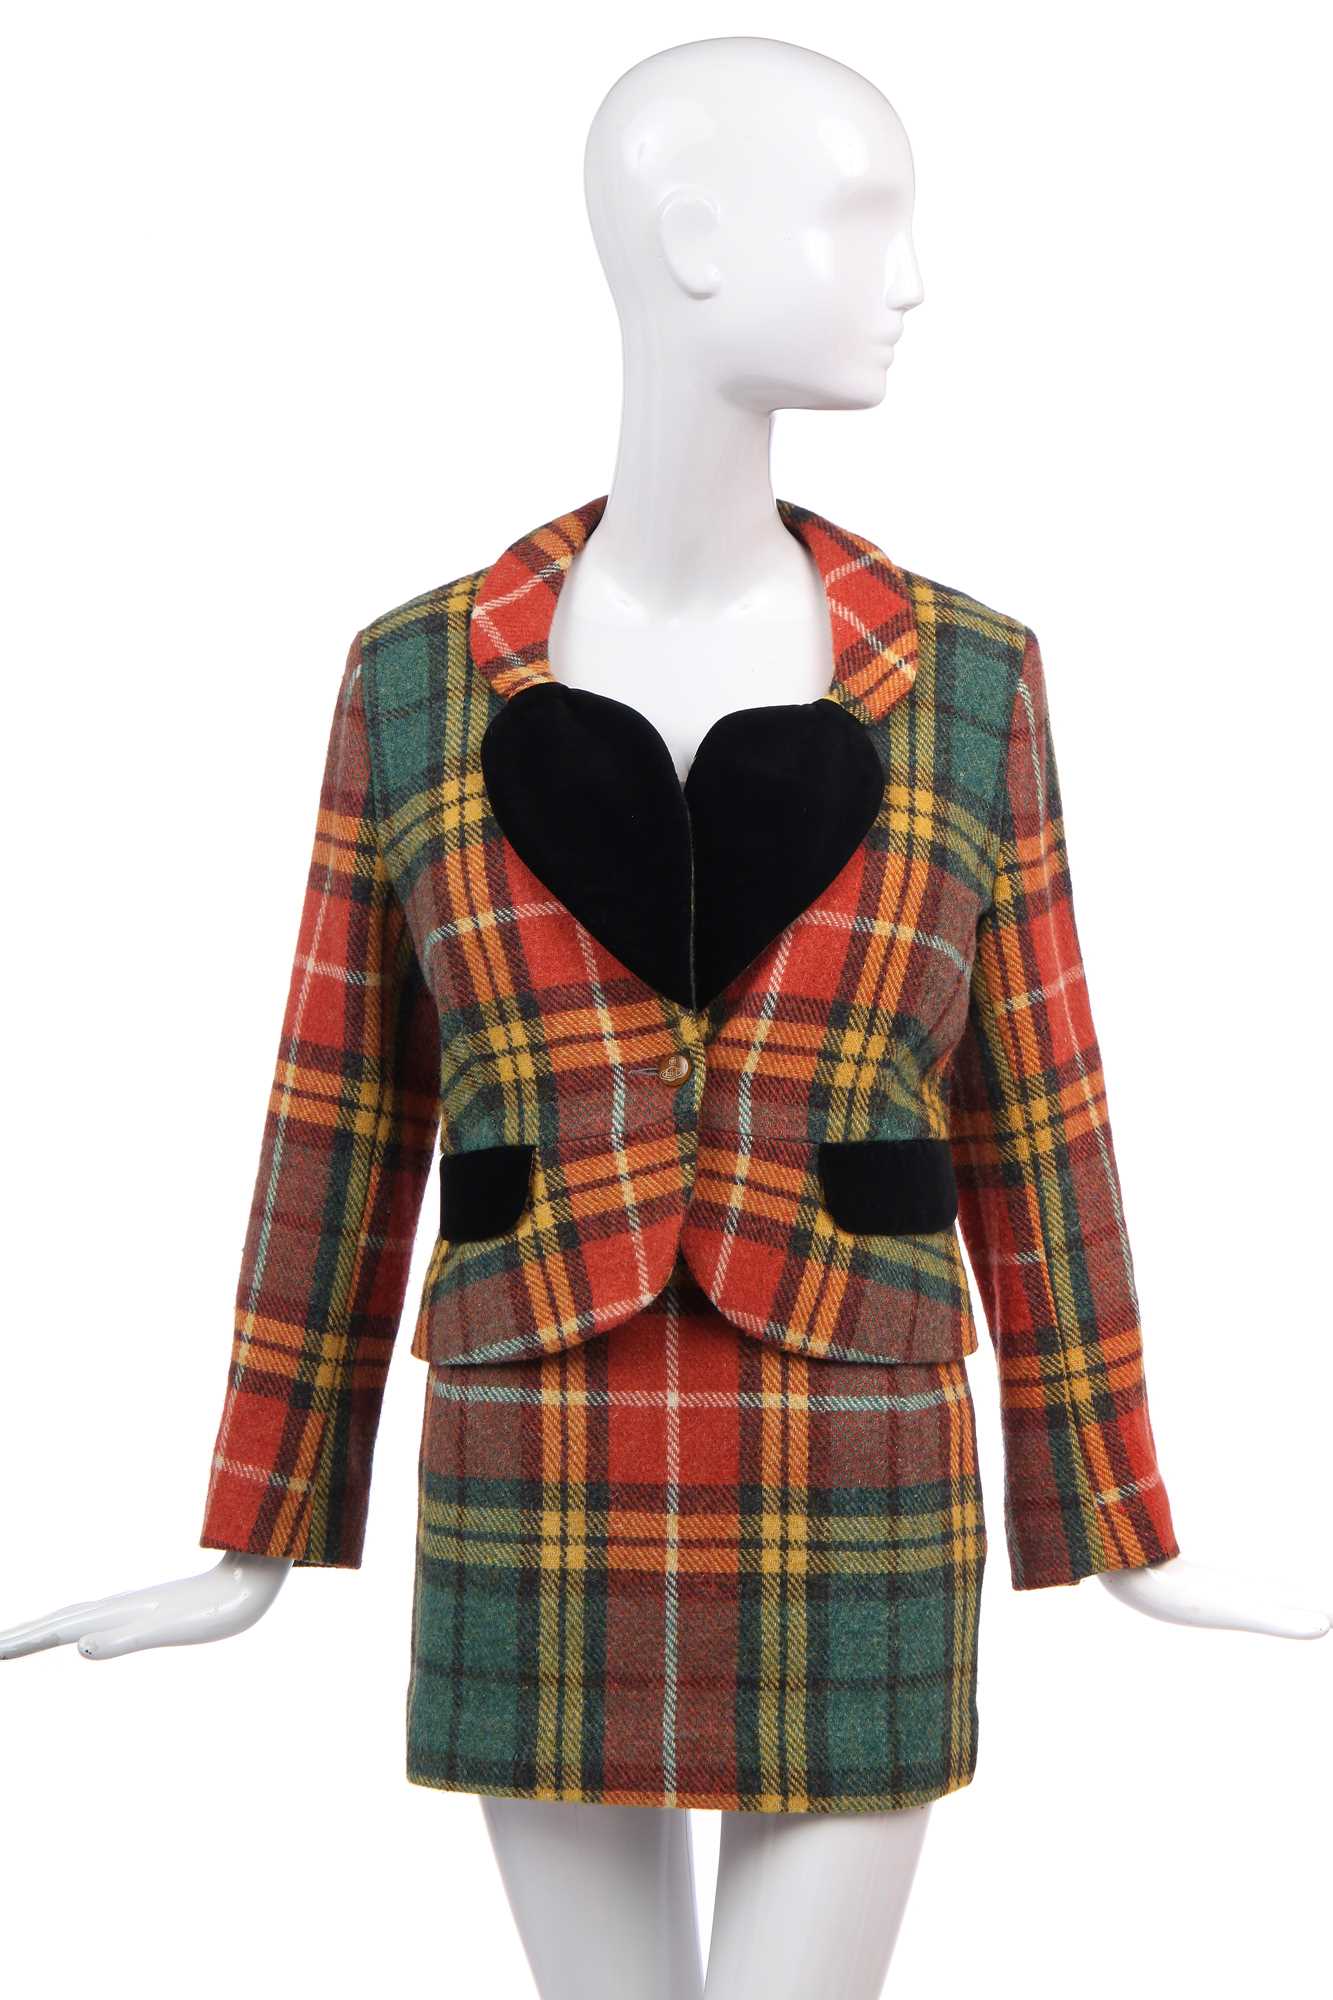 Lot 46 - A Vivienne Westwood  tartan 'Love Heart' suit, 'Dressing Up' collection, Autumn-Winter, 1991-92